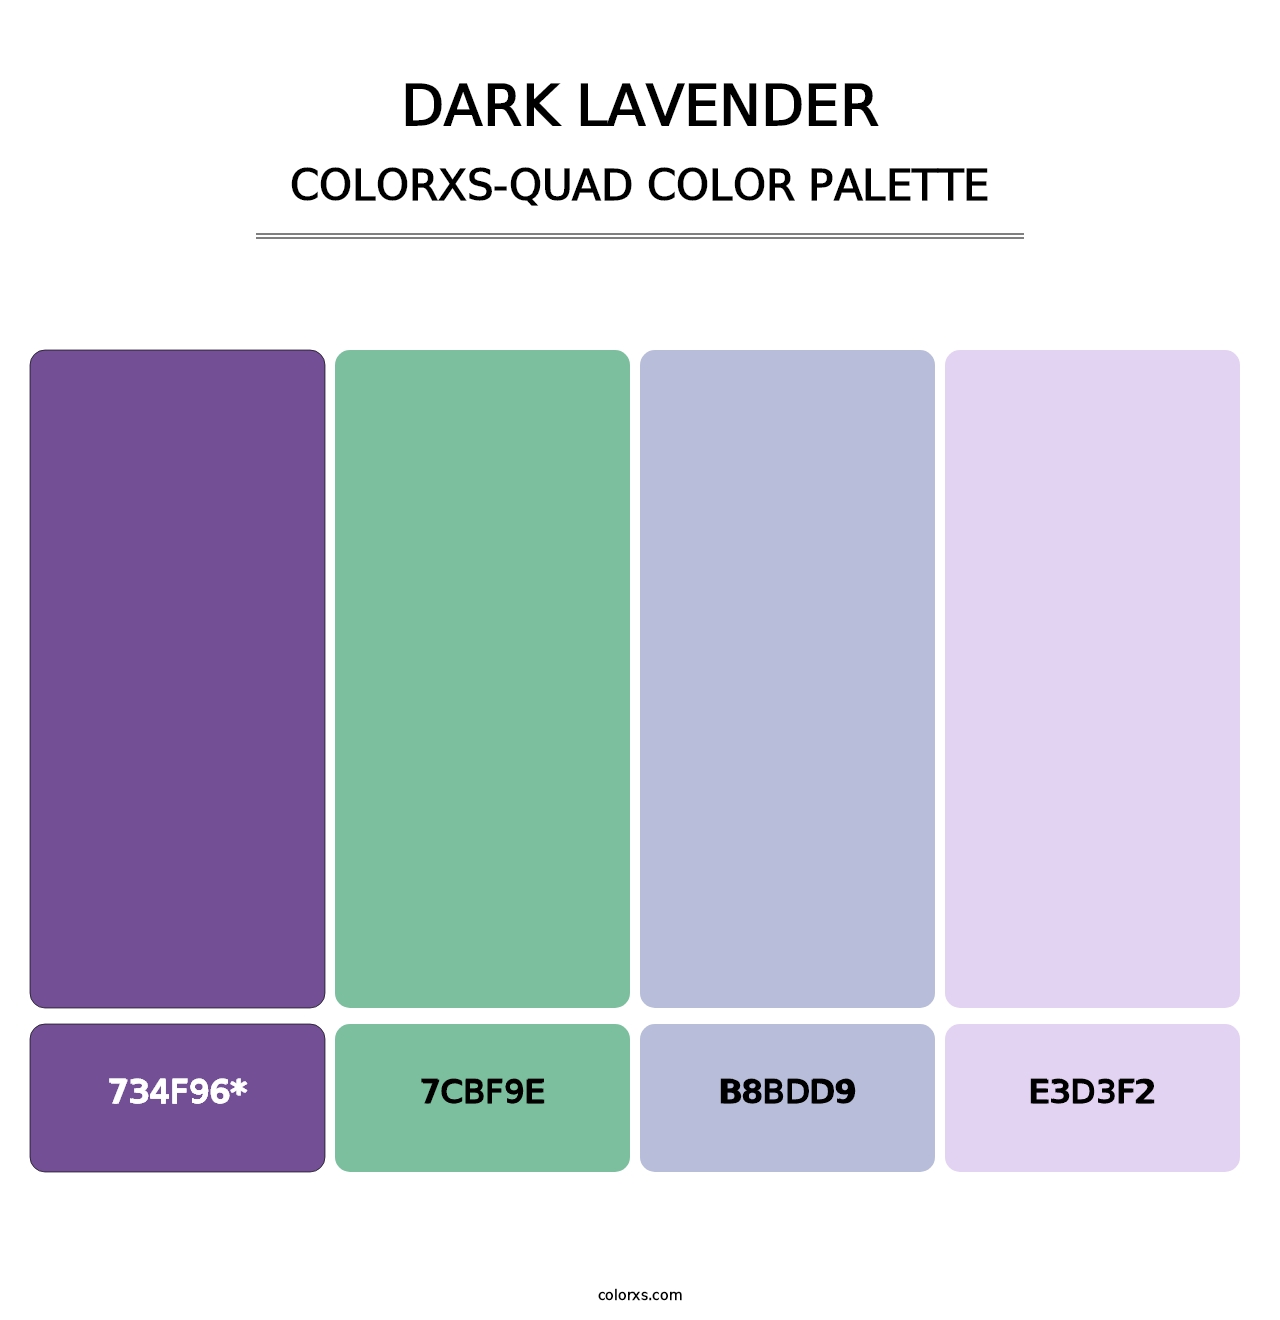 Dark Lavender - Colorxs Quad Palette